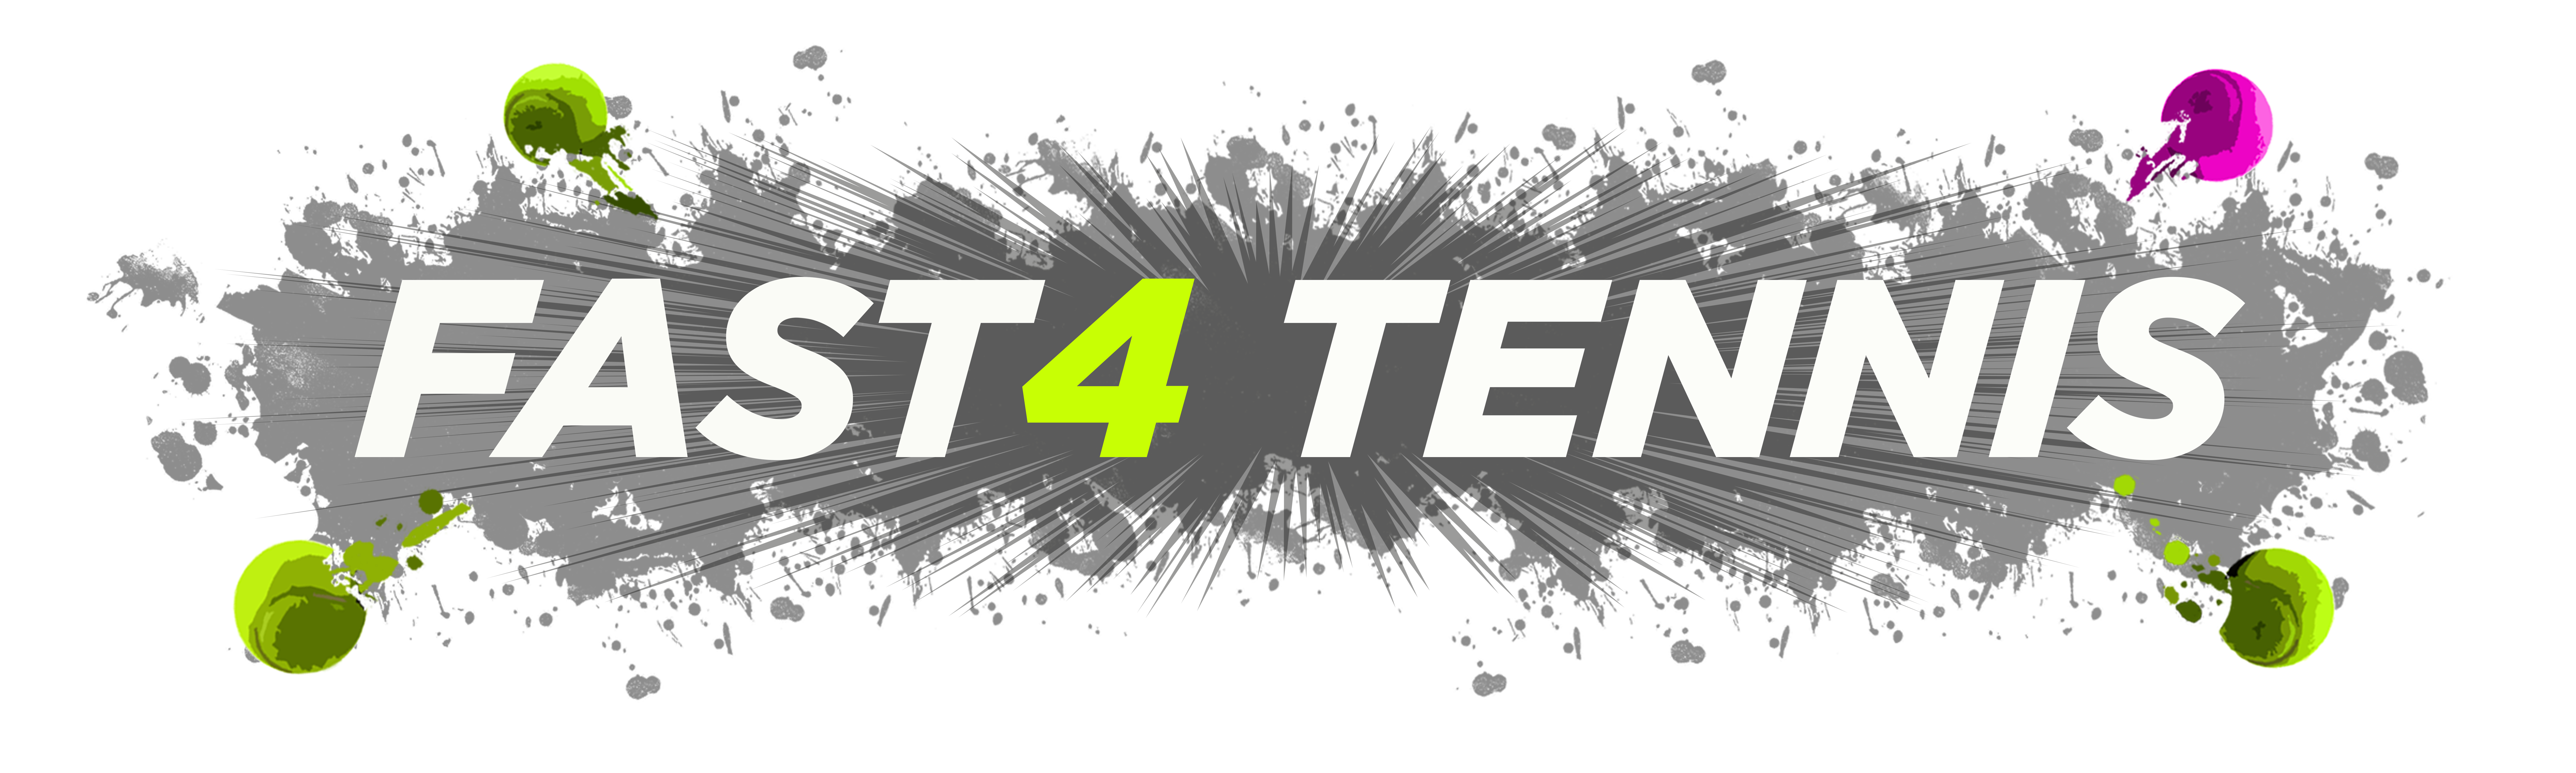 Learn More FAST4 Tennis | LTA